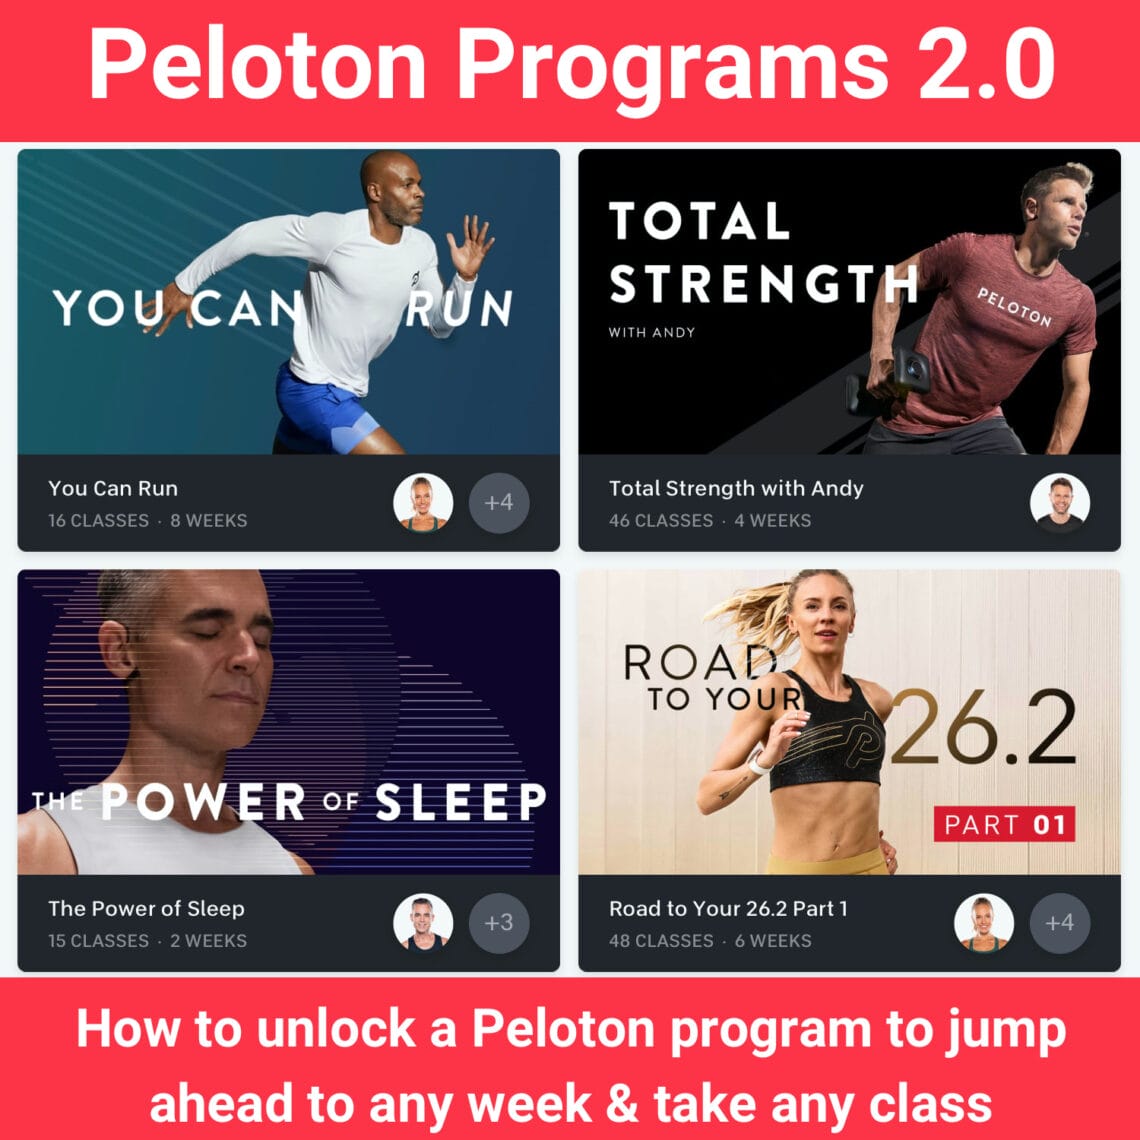 Peloton Program Update Guide to unlocking Peloton programs, jumping to